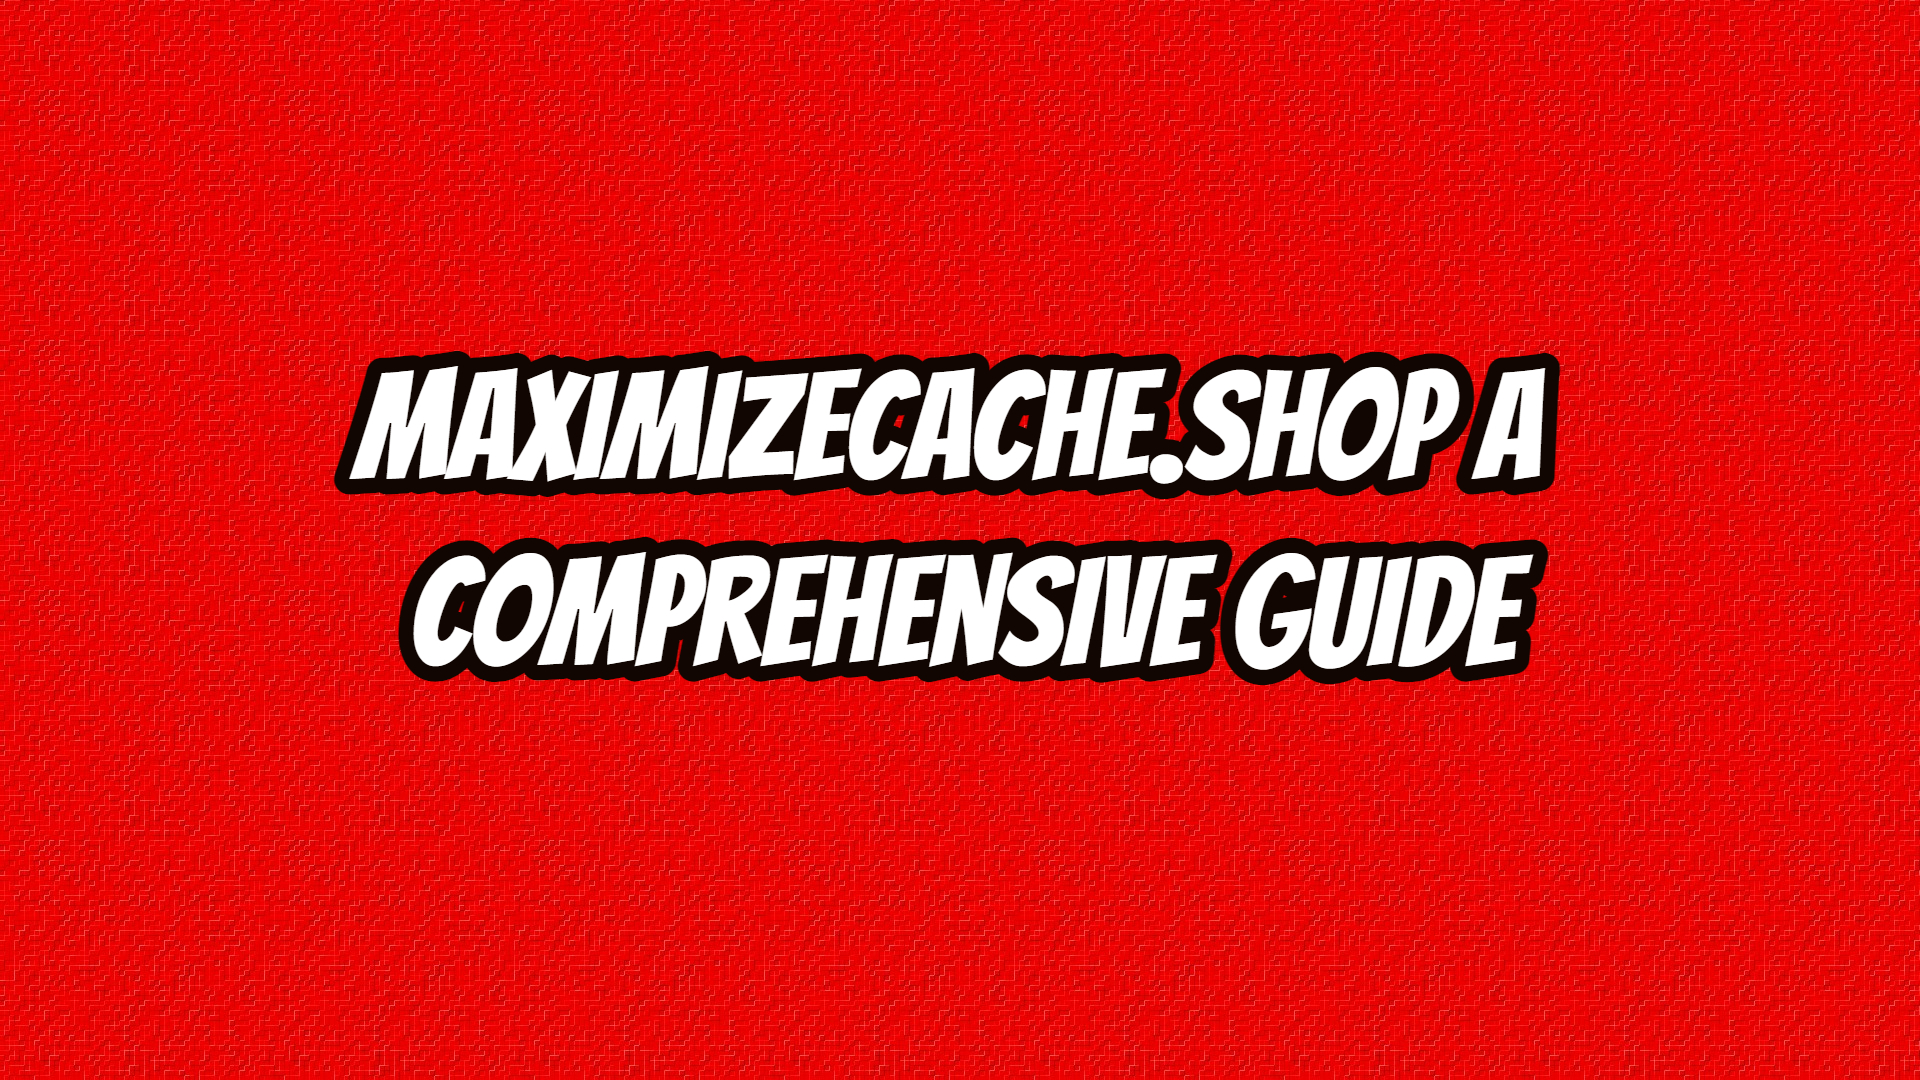 Maximizecache.shop: A Comprehensive Guide